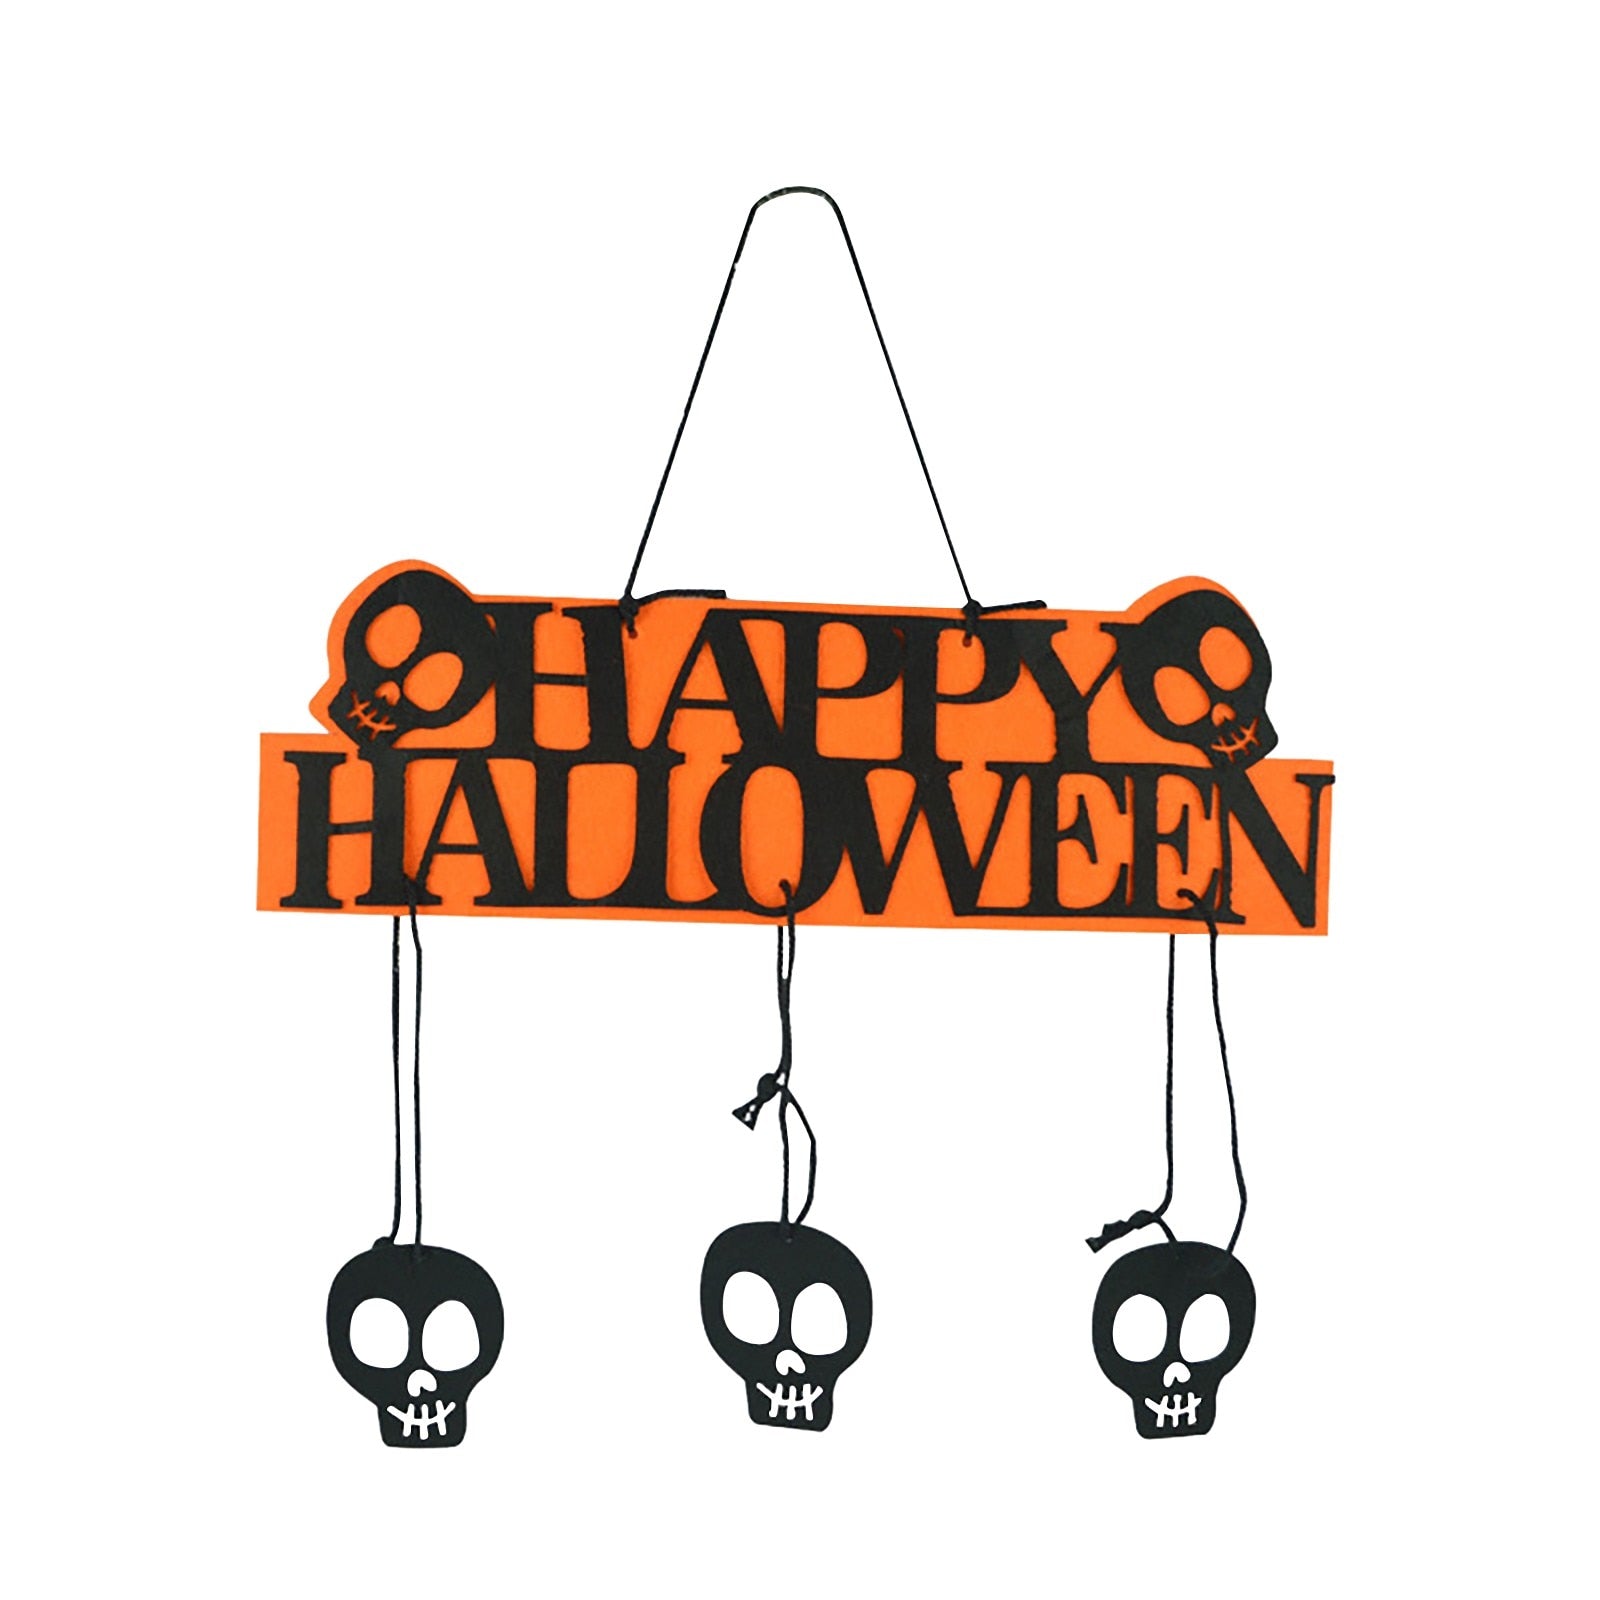 SIX - Happy Halloween Signs